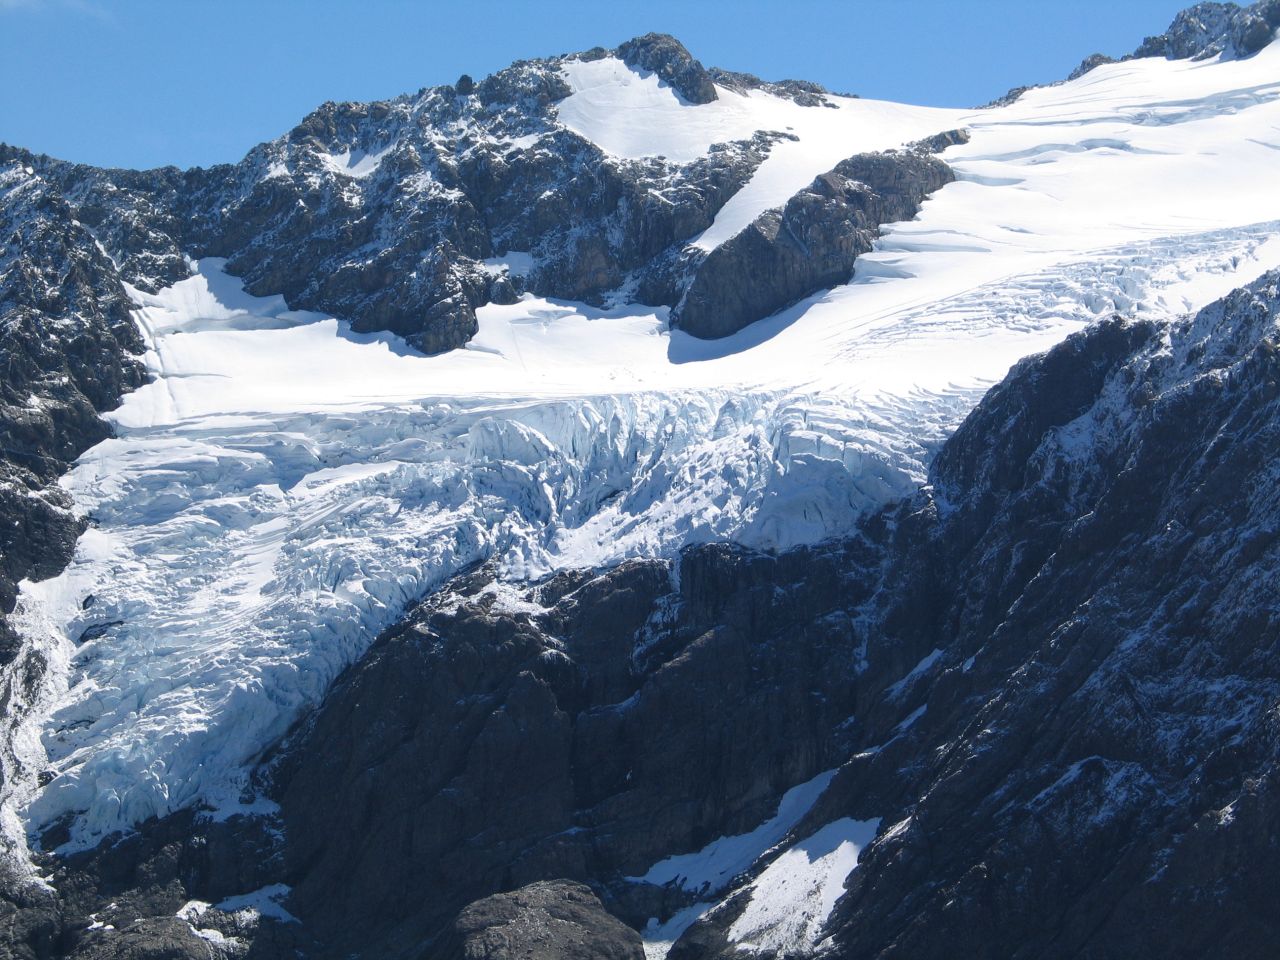 fotka / image vystup na Avalanche Peak - Crow Glacier na svazich Mt. Rolleston, New Zealand